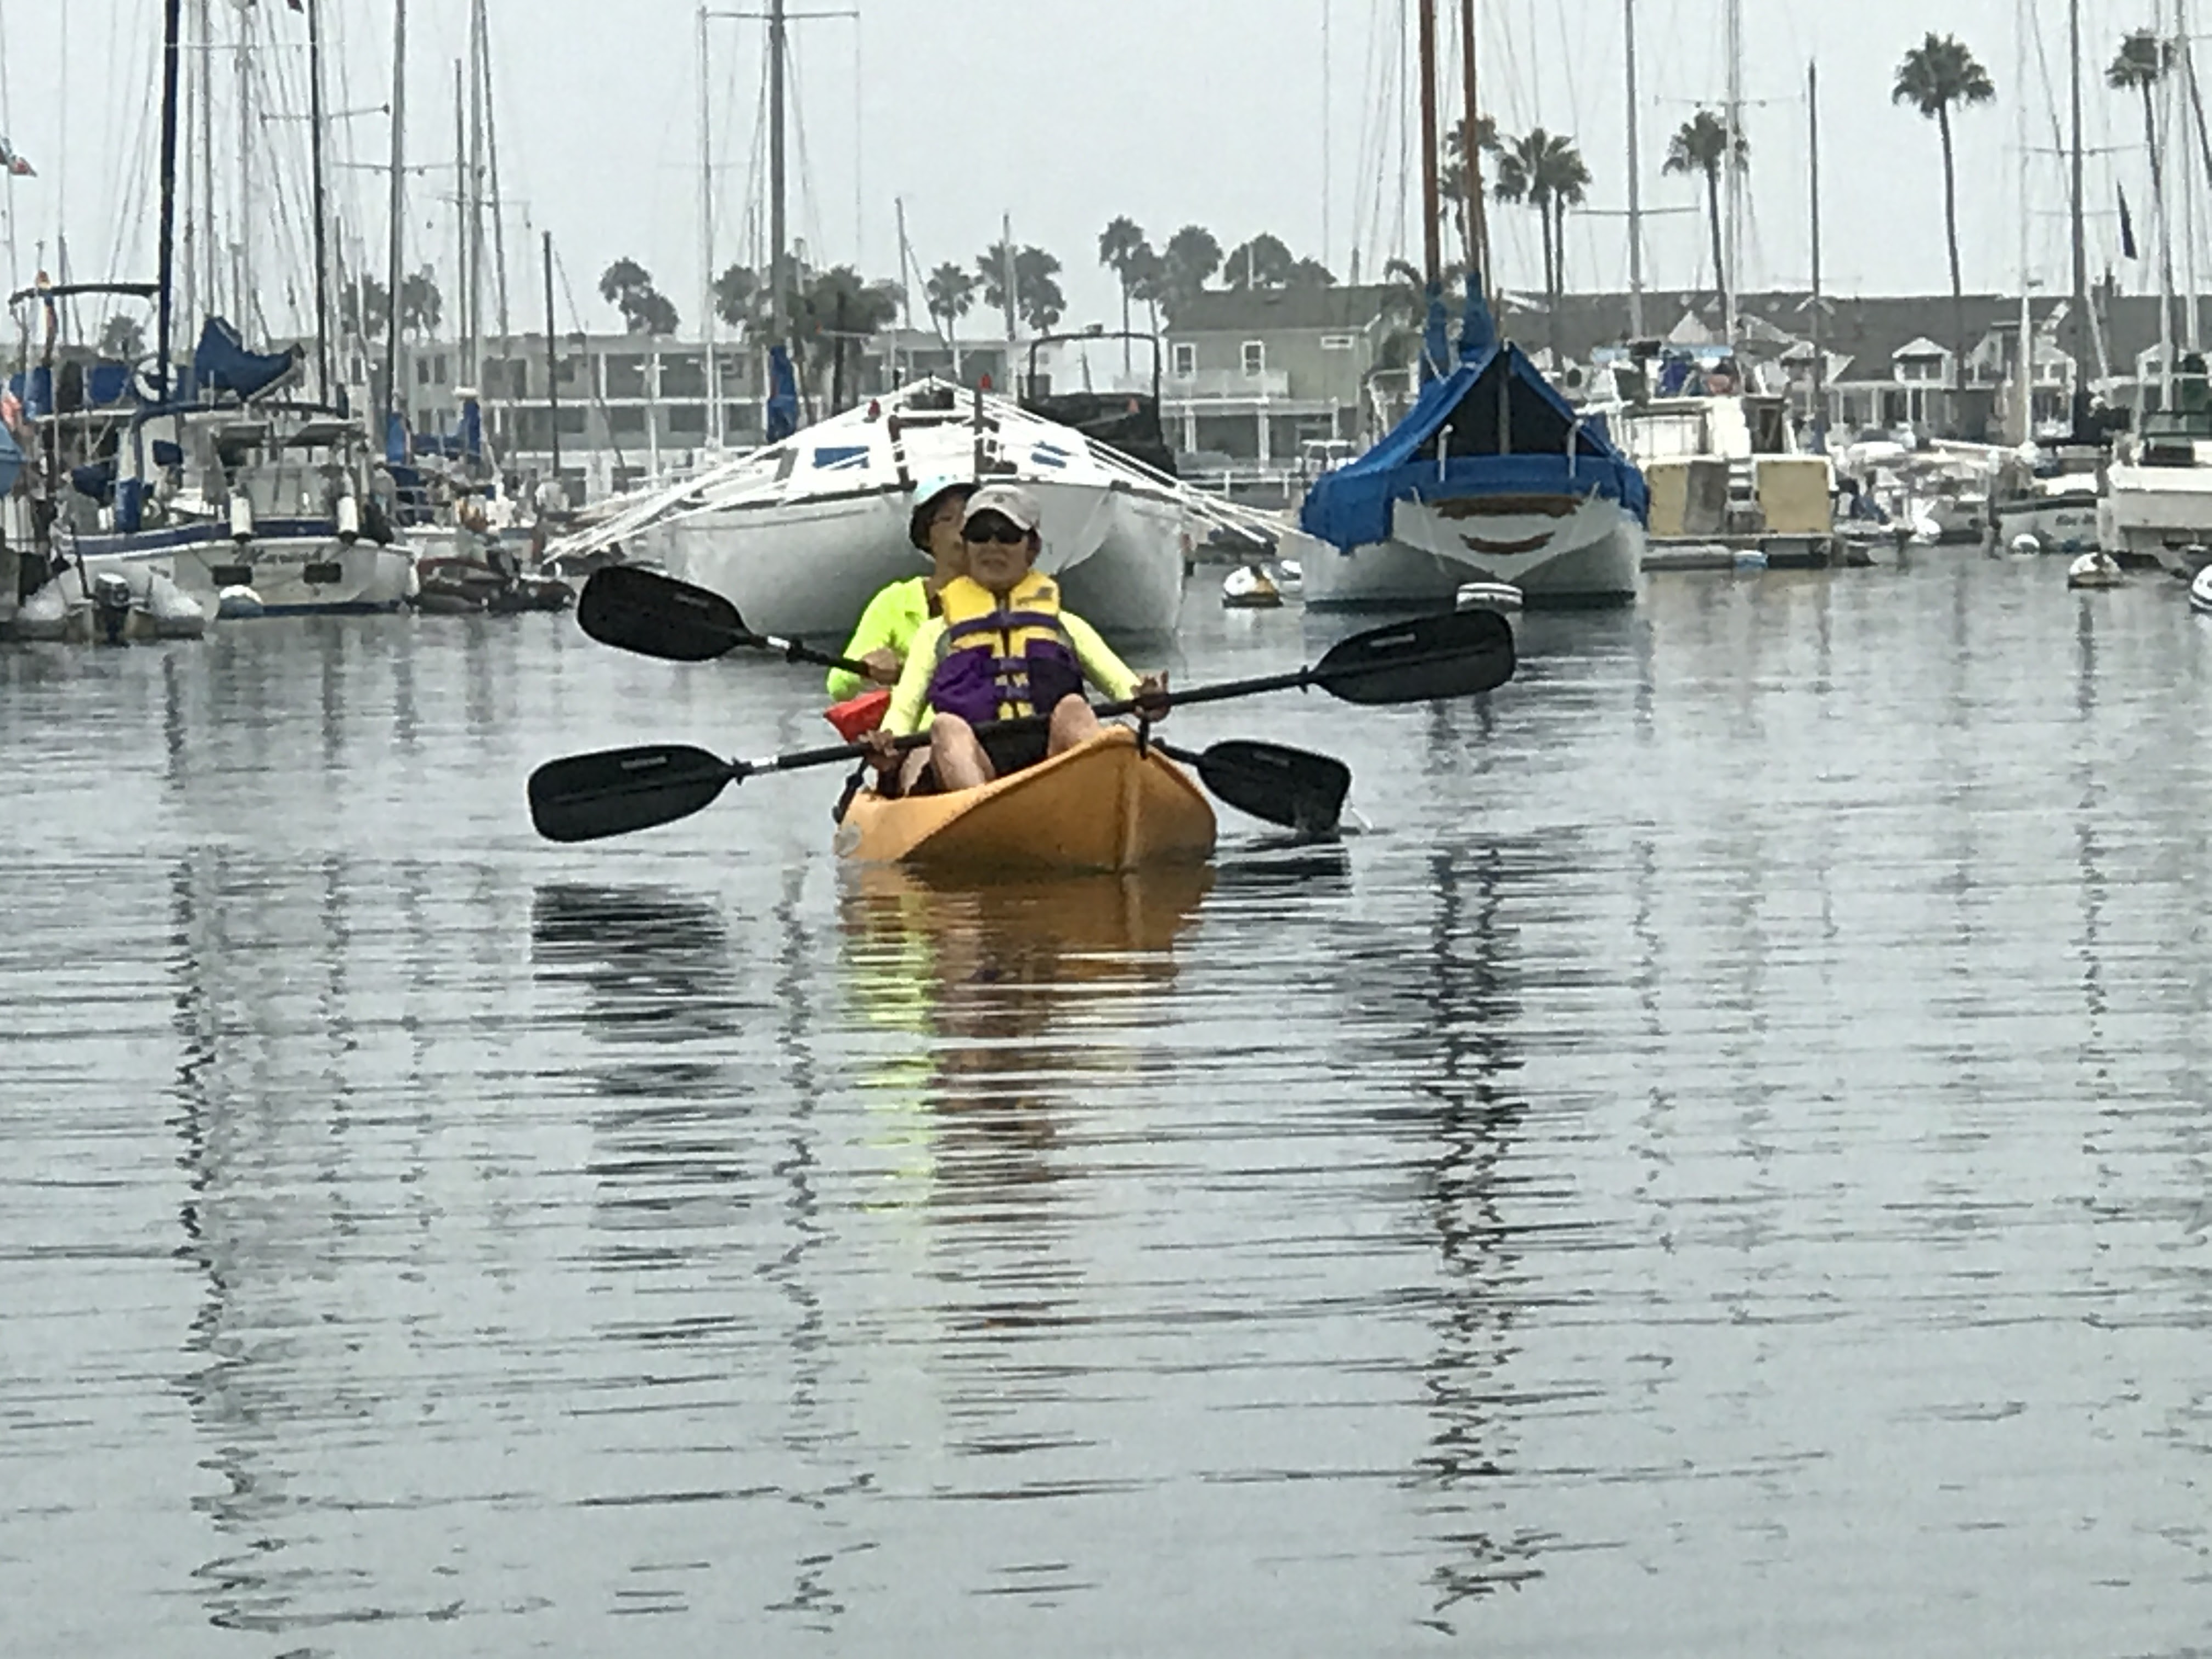 Newport Beach Harbor Kayak \u2013 Kayaking is fun under the sun | best ...